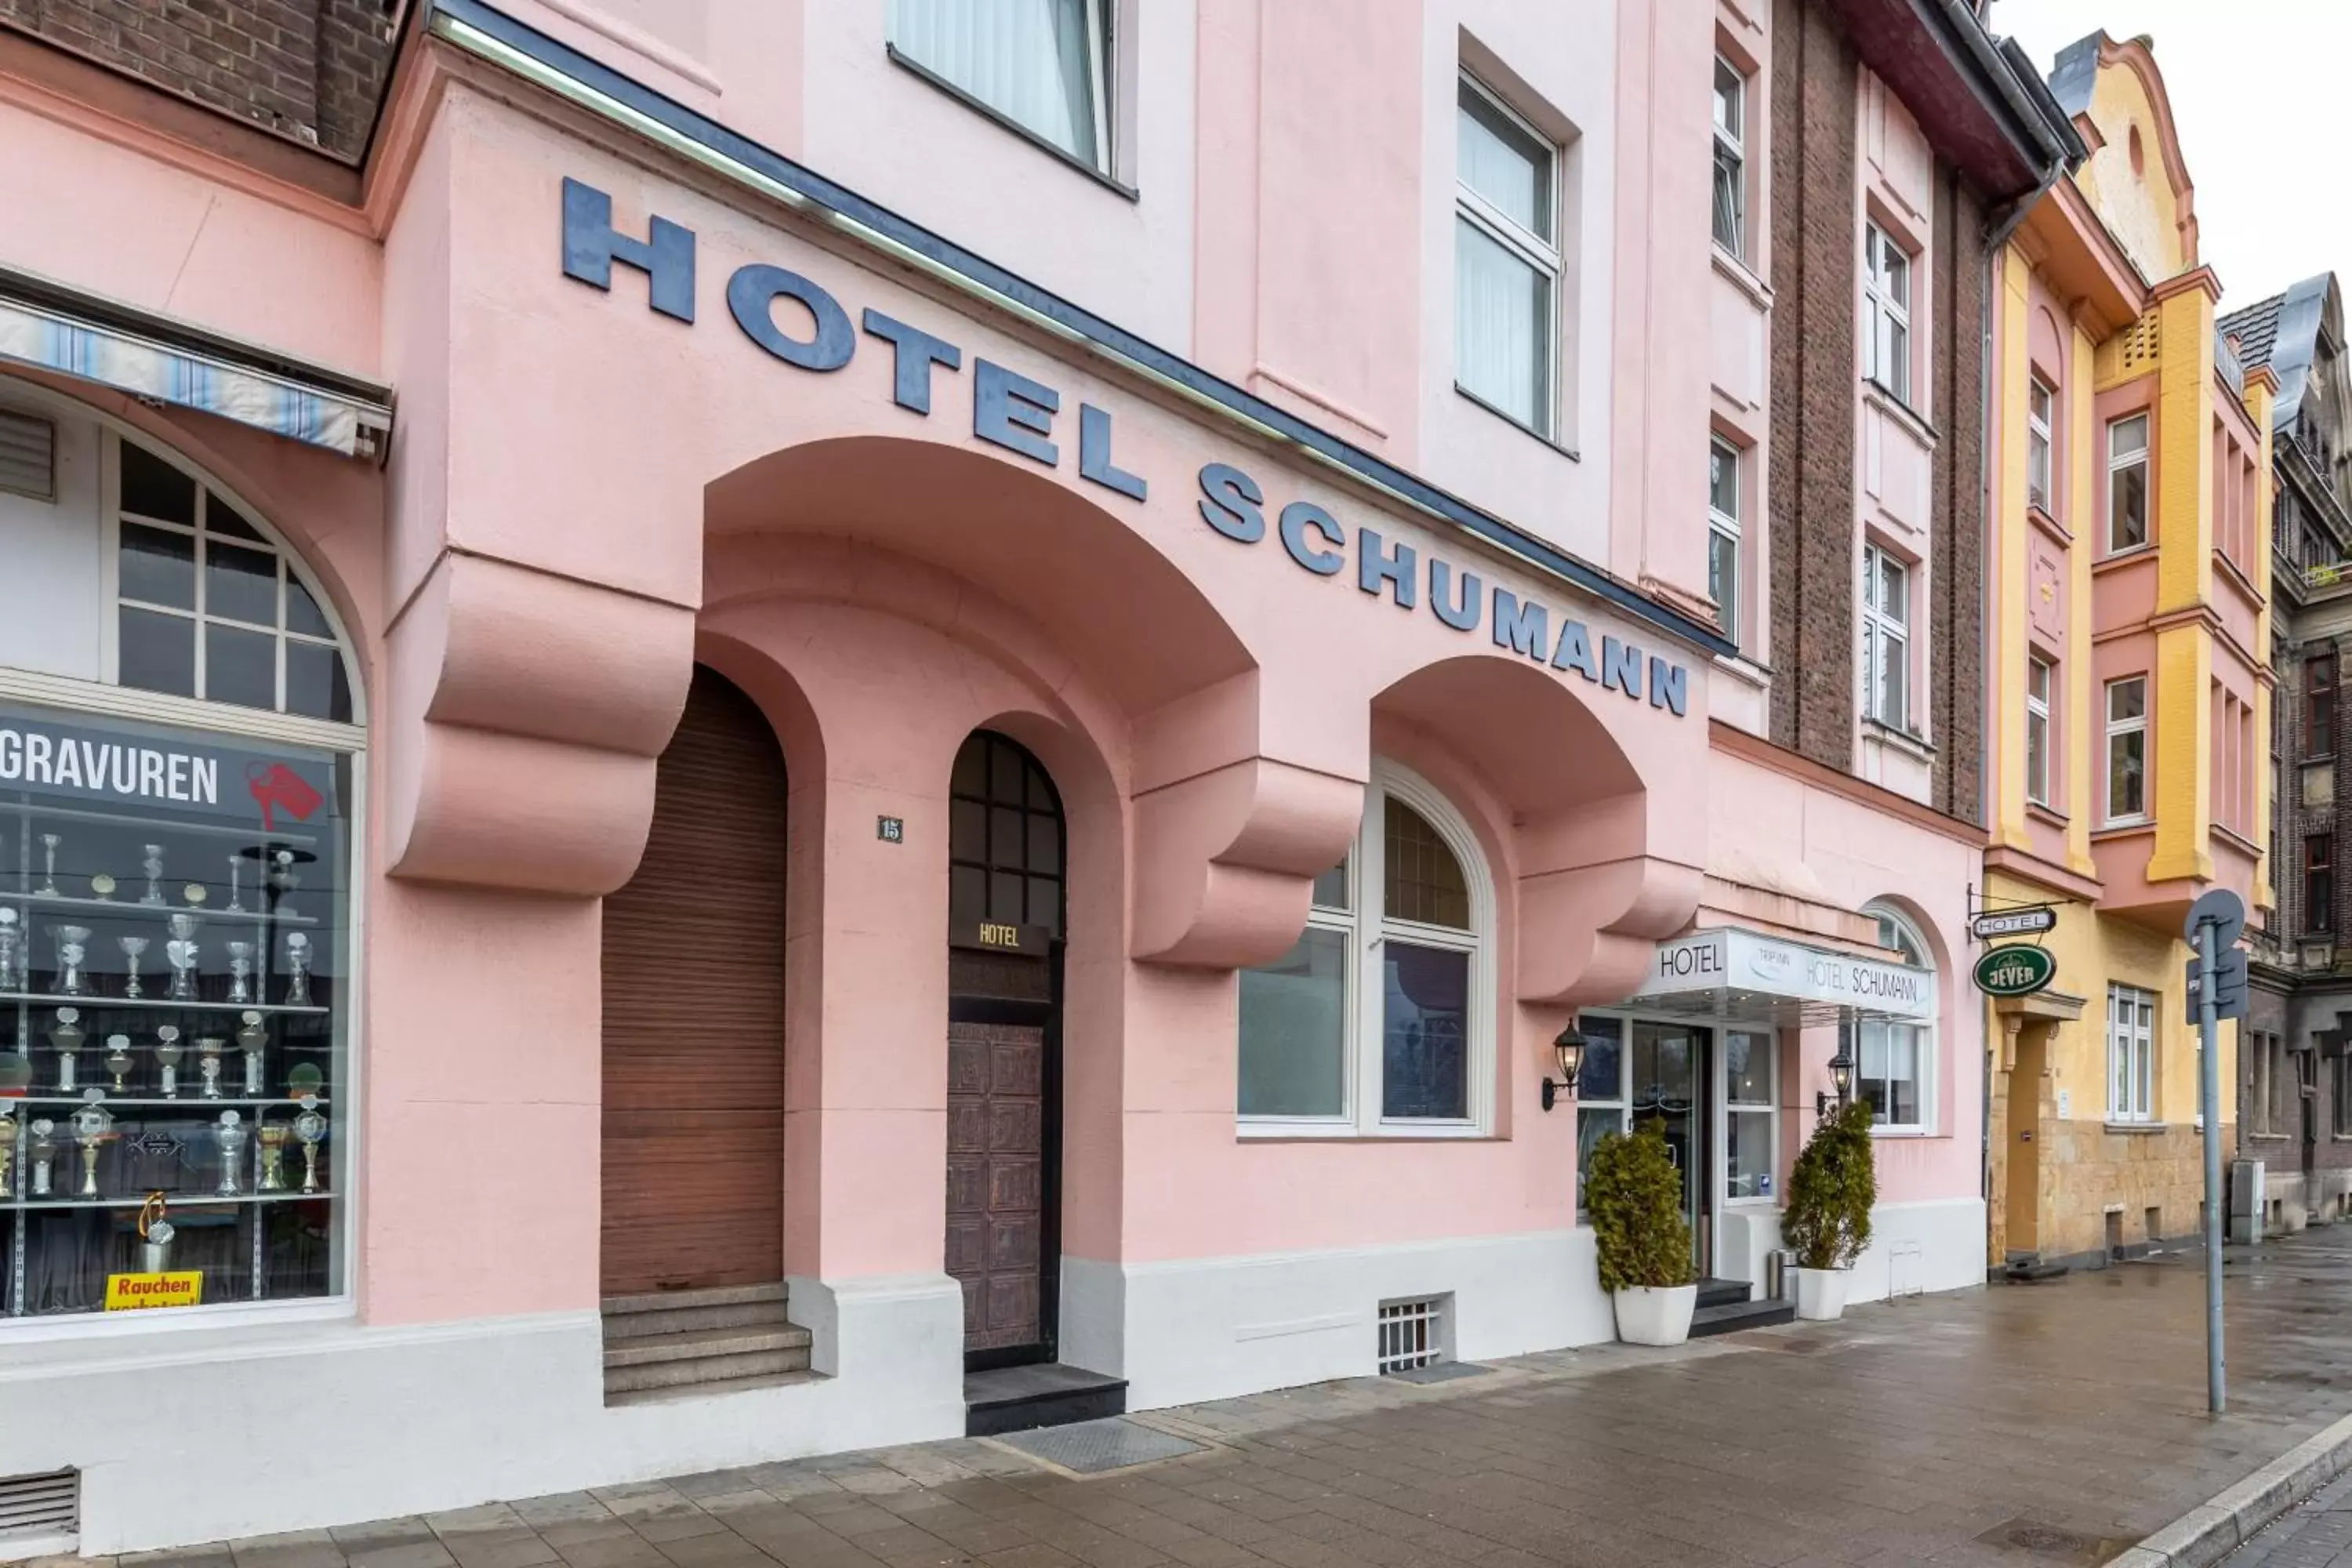 Facade/entrance in Trip Inn Hotel Schumann